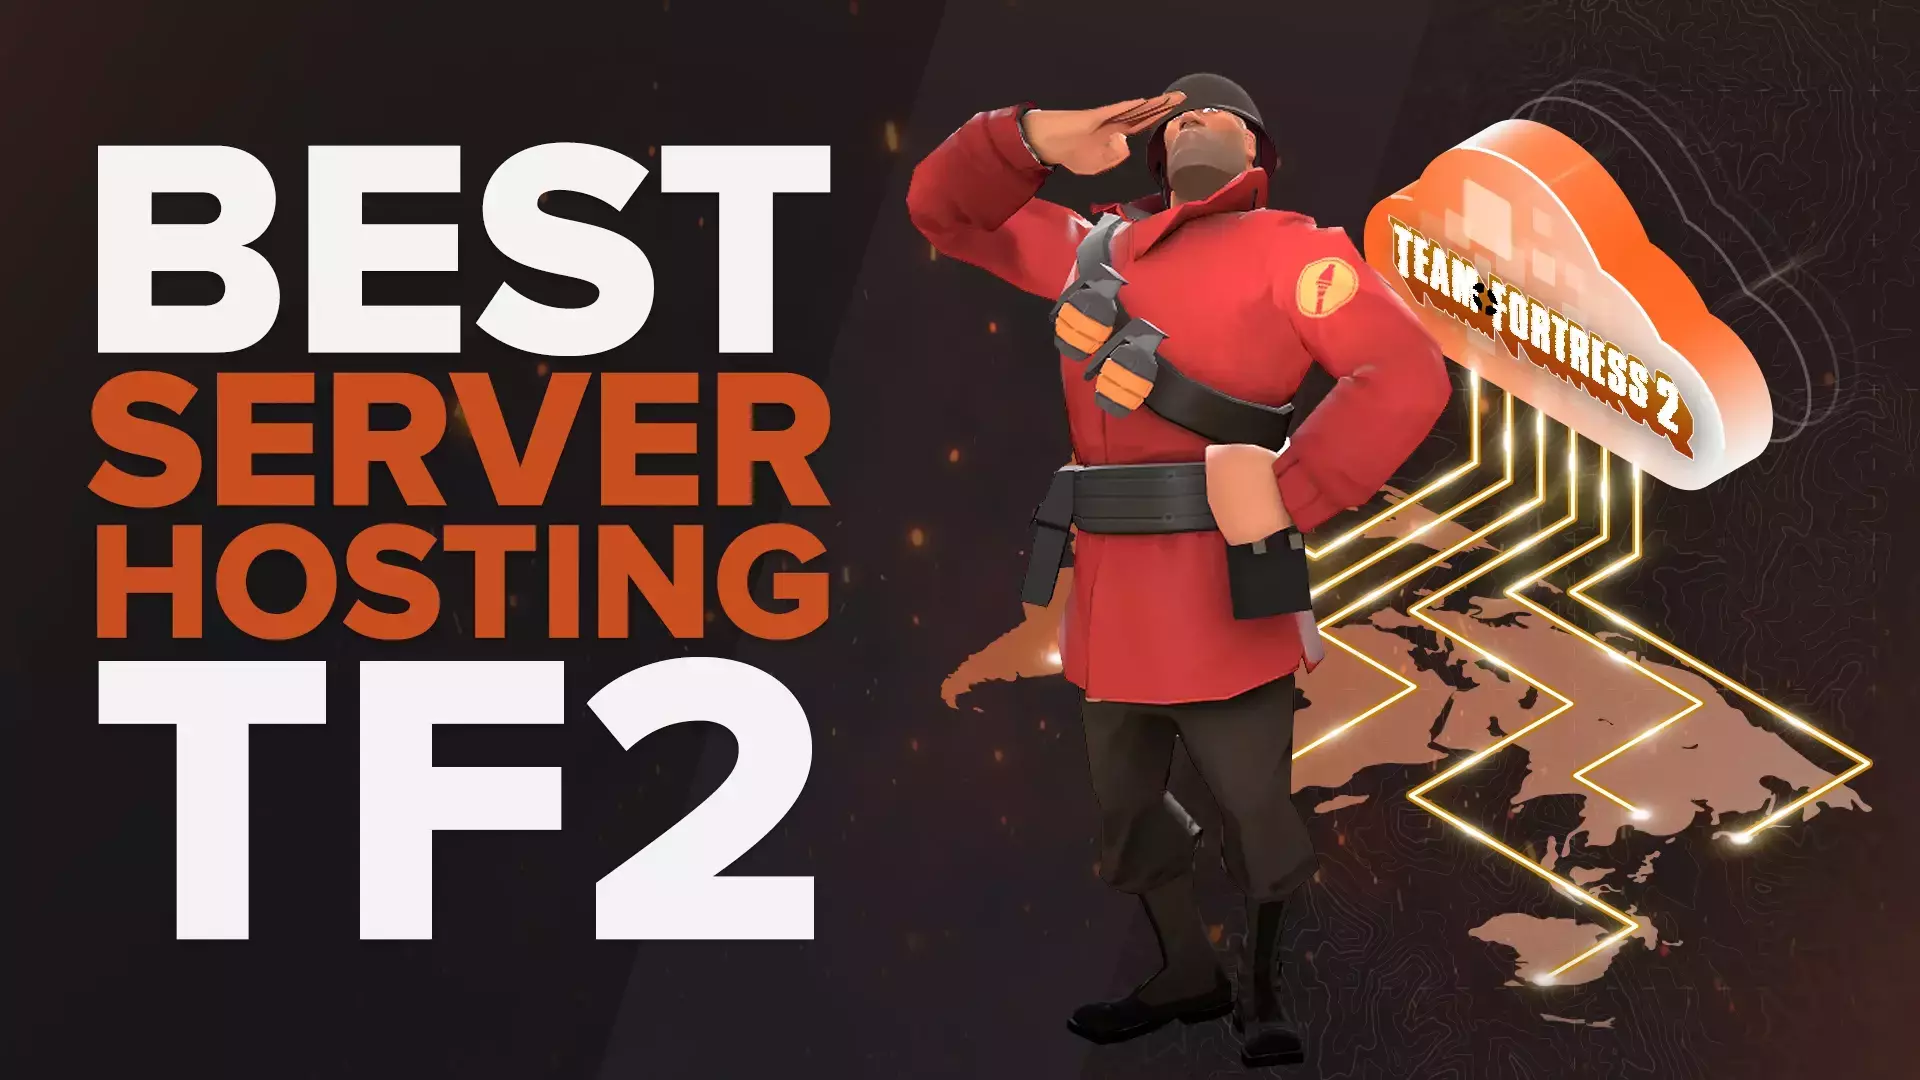 Best Team Fortress 2 Server Hosting Service [All Tested]